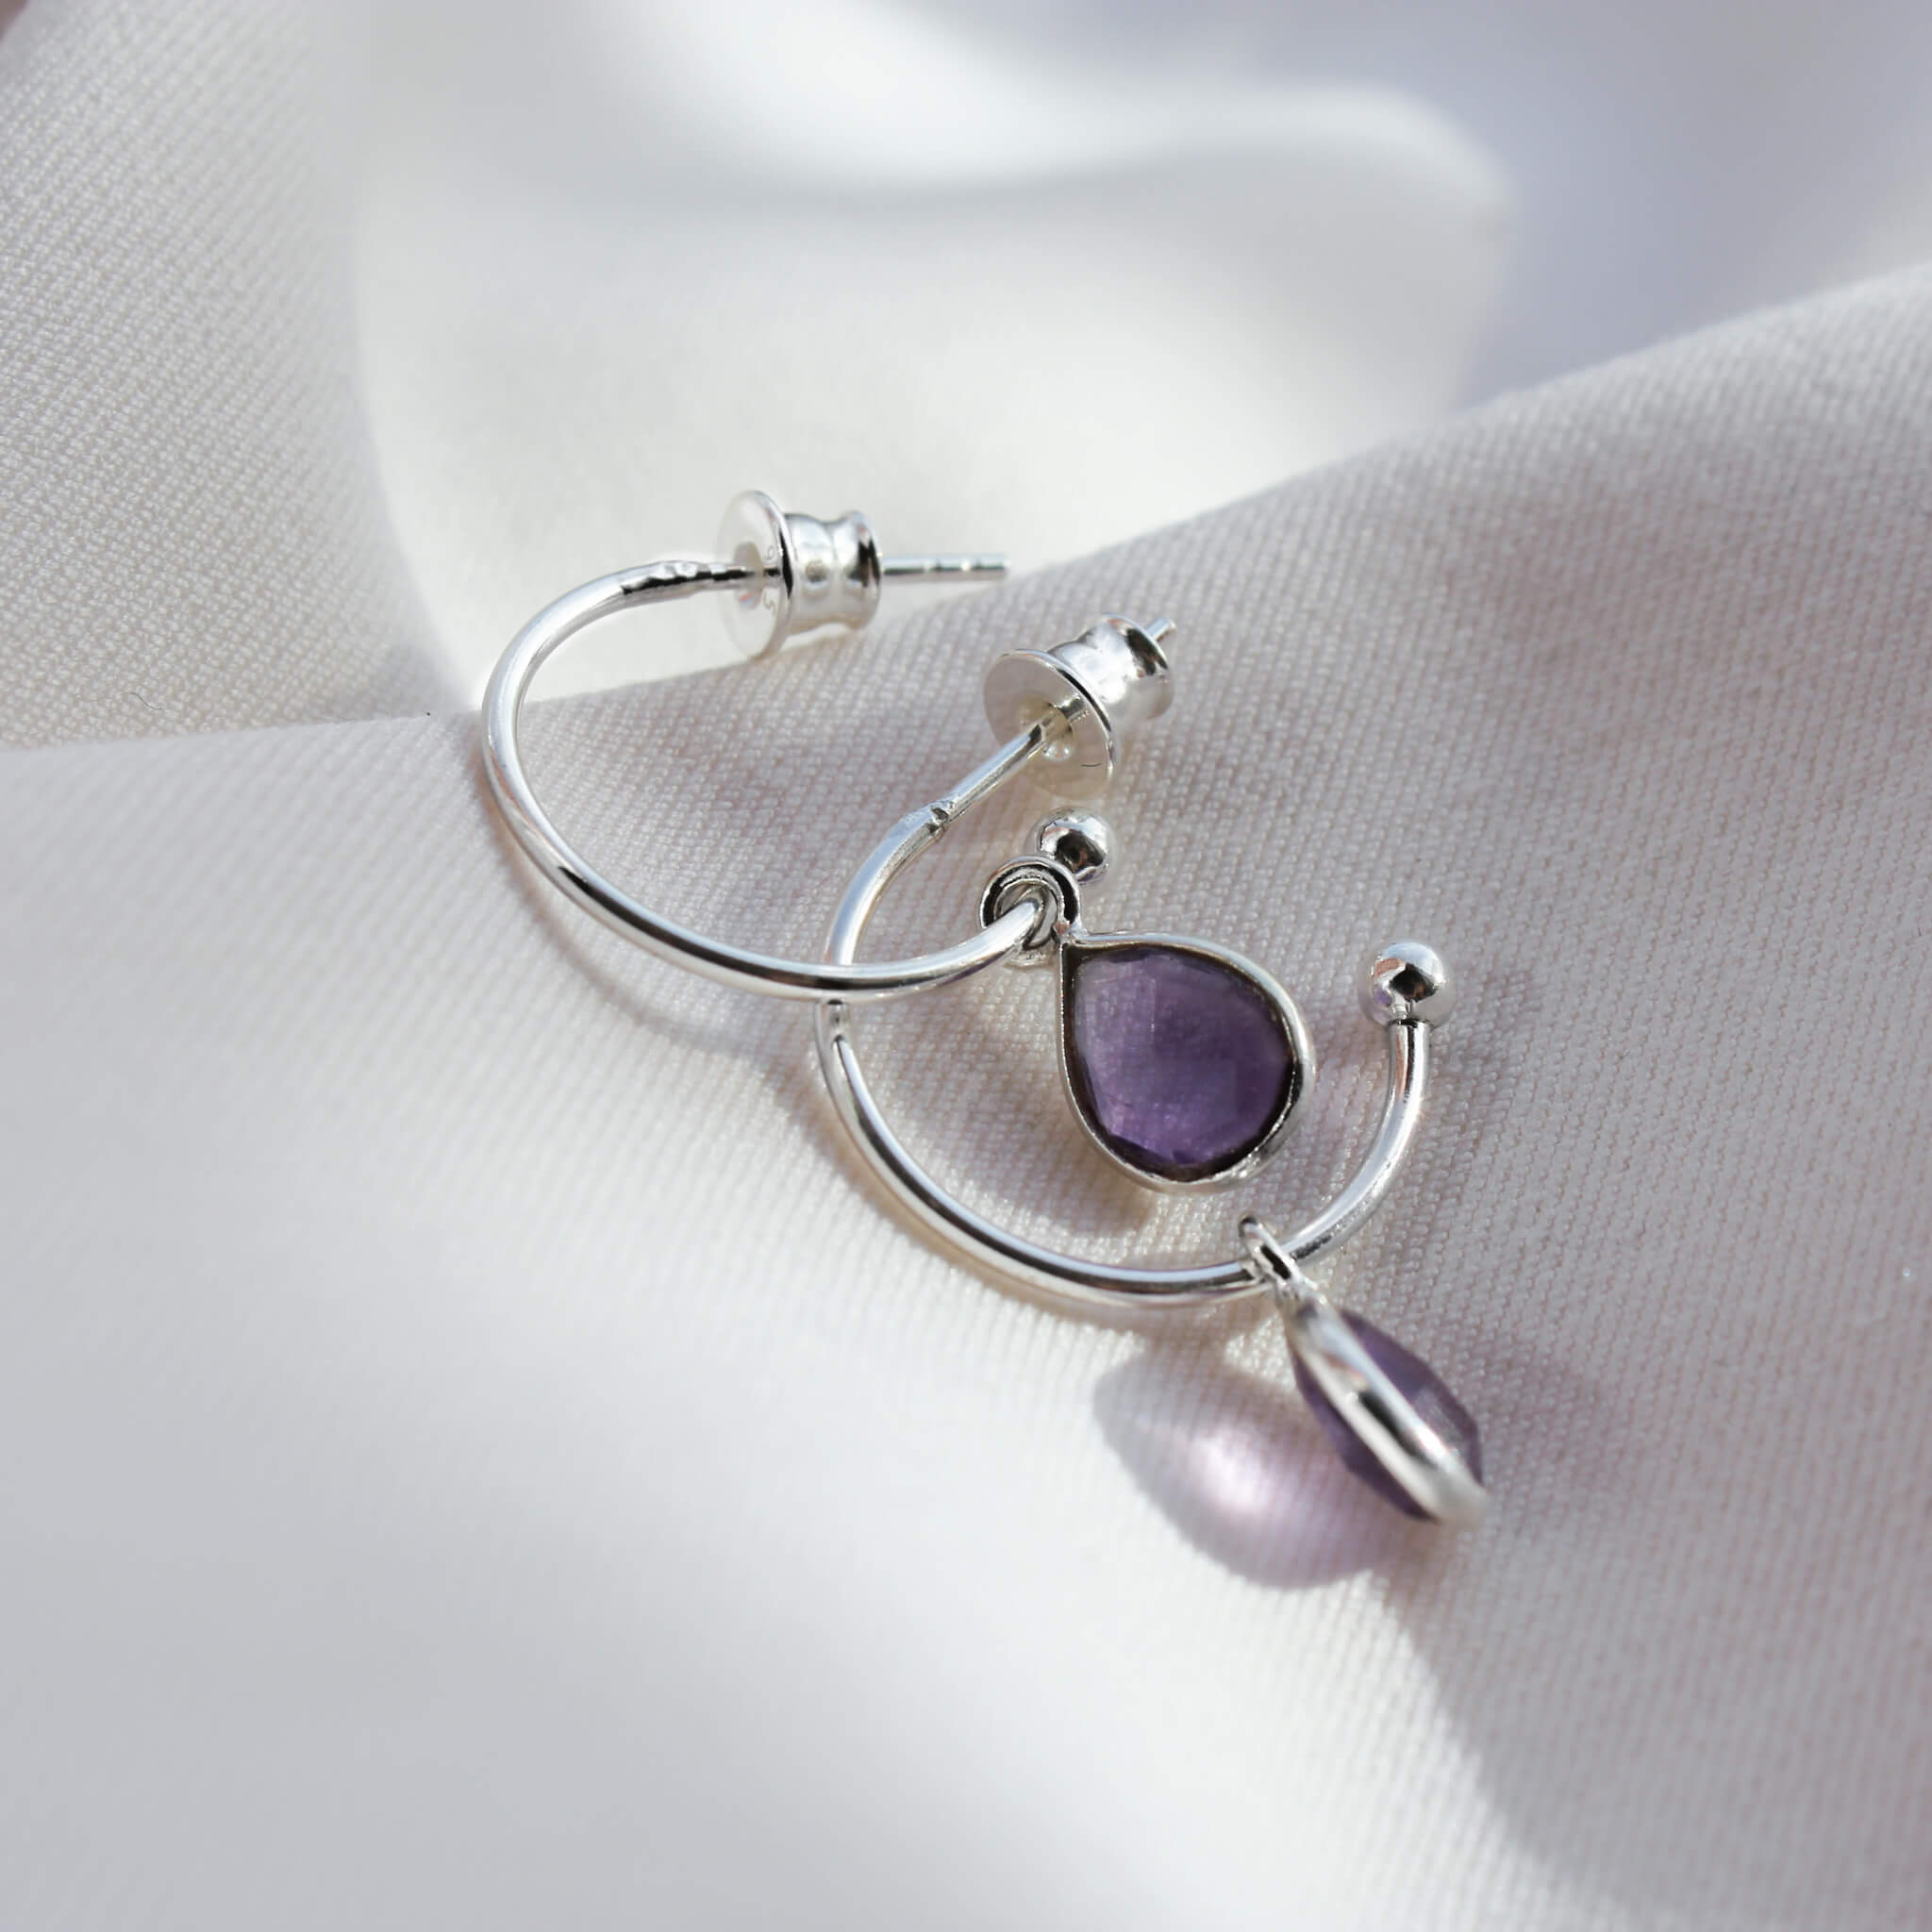 Silver hoop pendant earrings with amethyst on material.